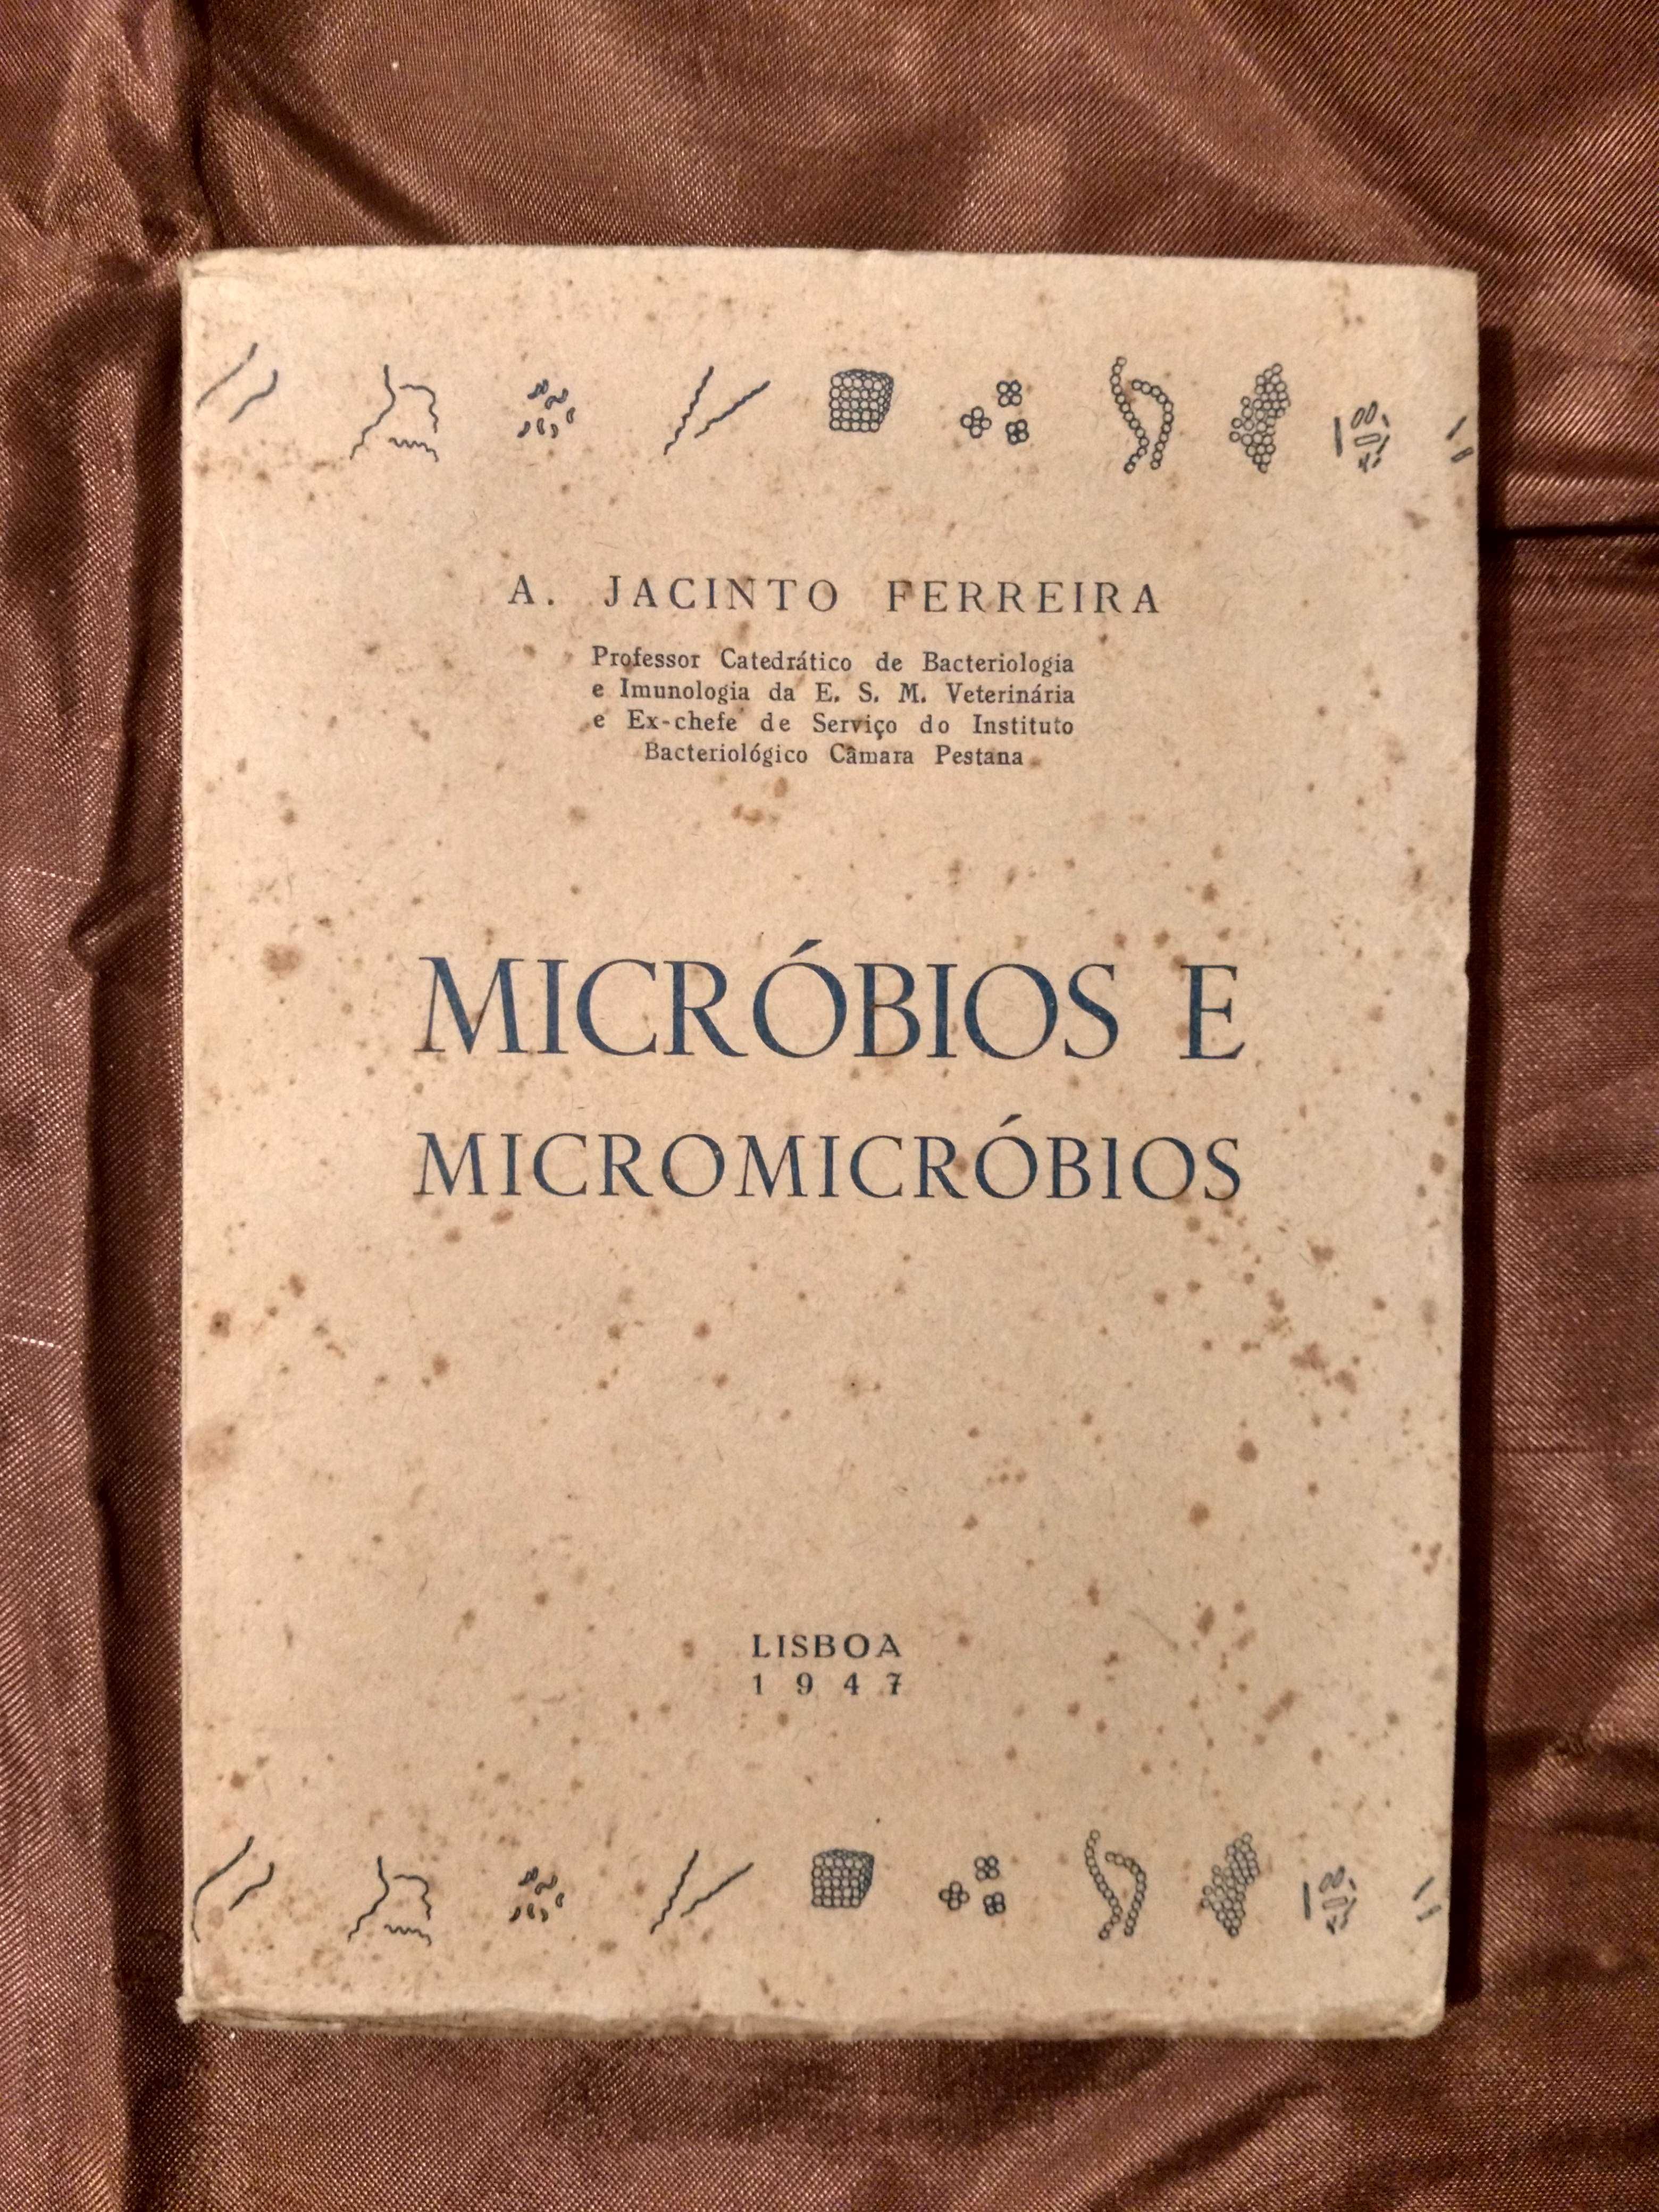 Micróbios E Micromicróbios – A. Jacinto Ferreira (1947)